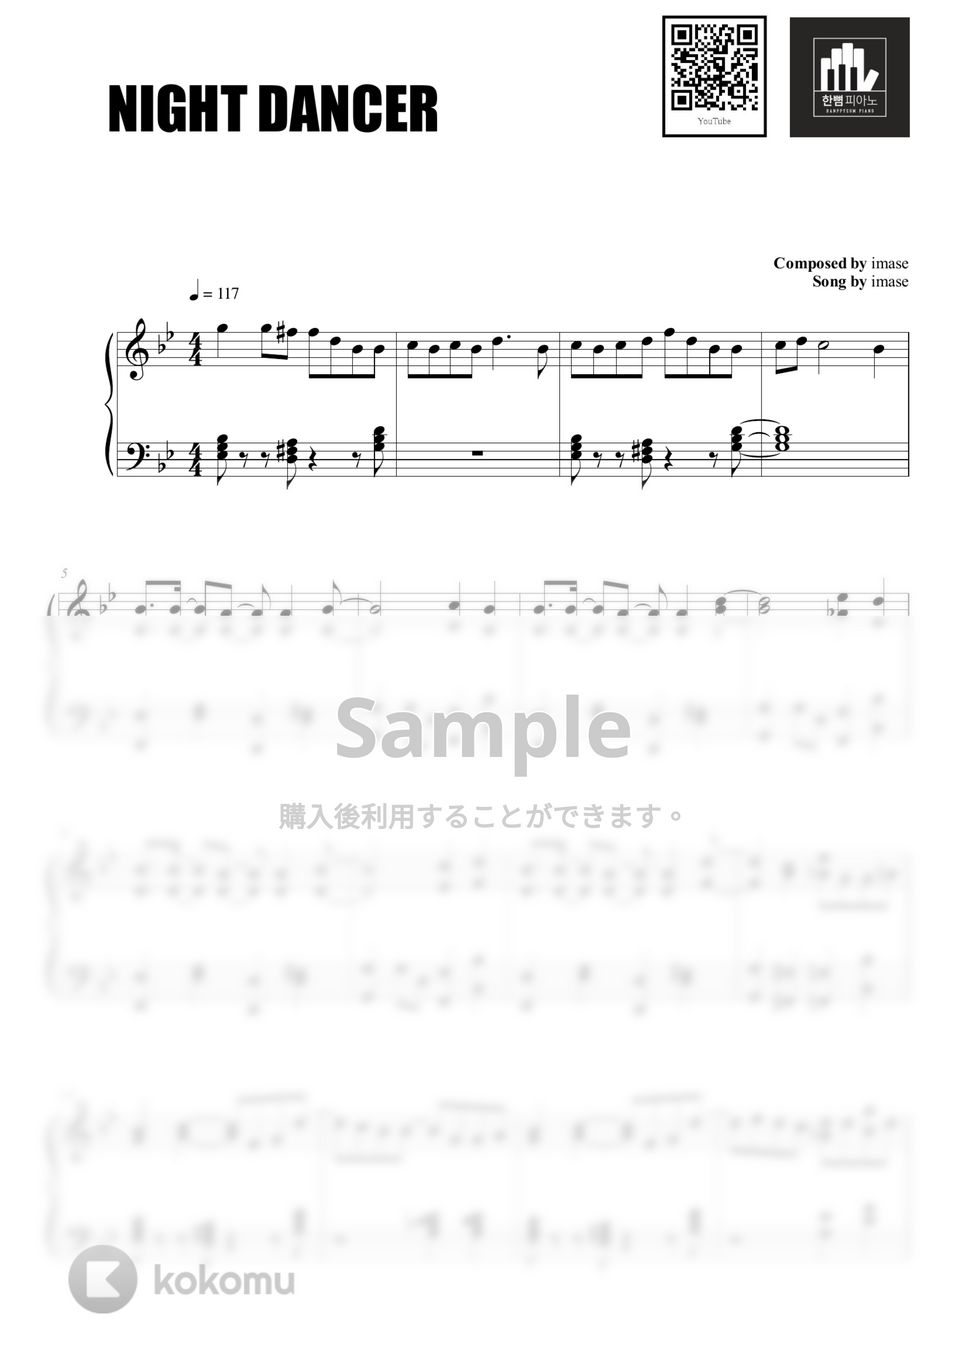 imase - NIGHT DANCER (PIANO COVER) by HANPPYEOMPIANO